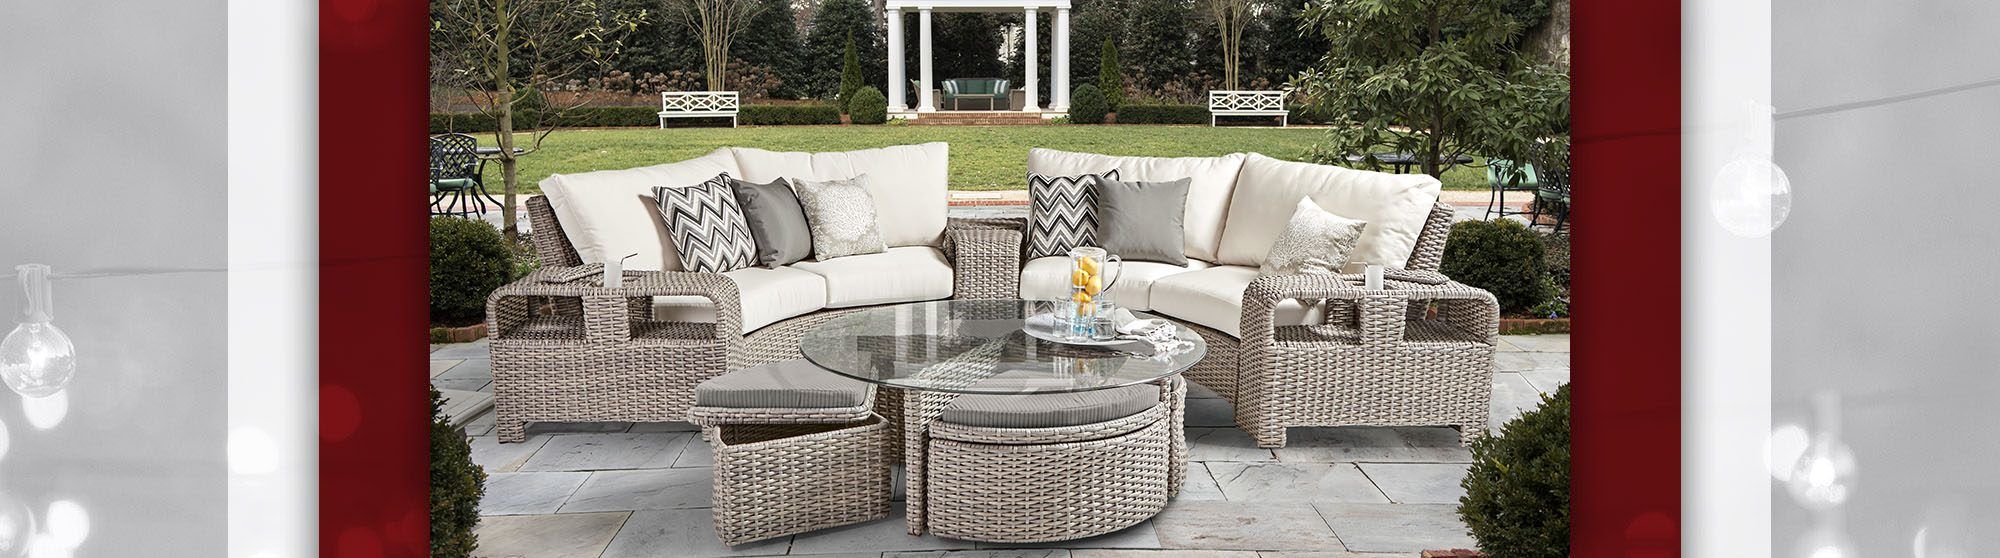 comfy outdoor furniture